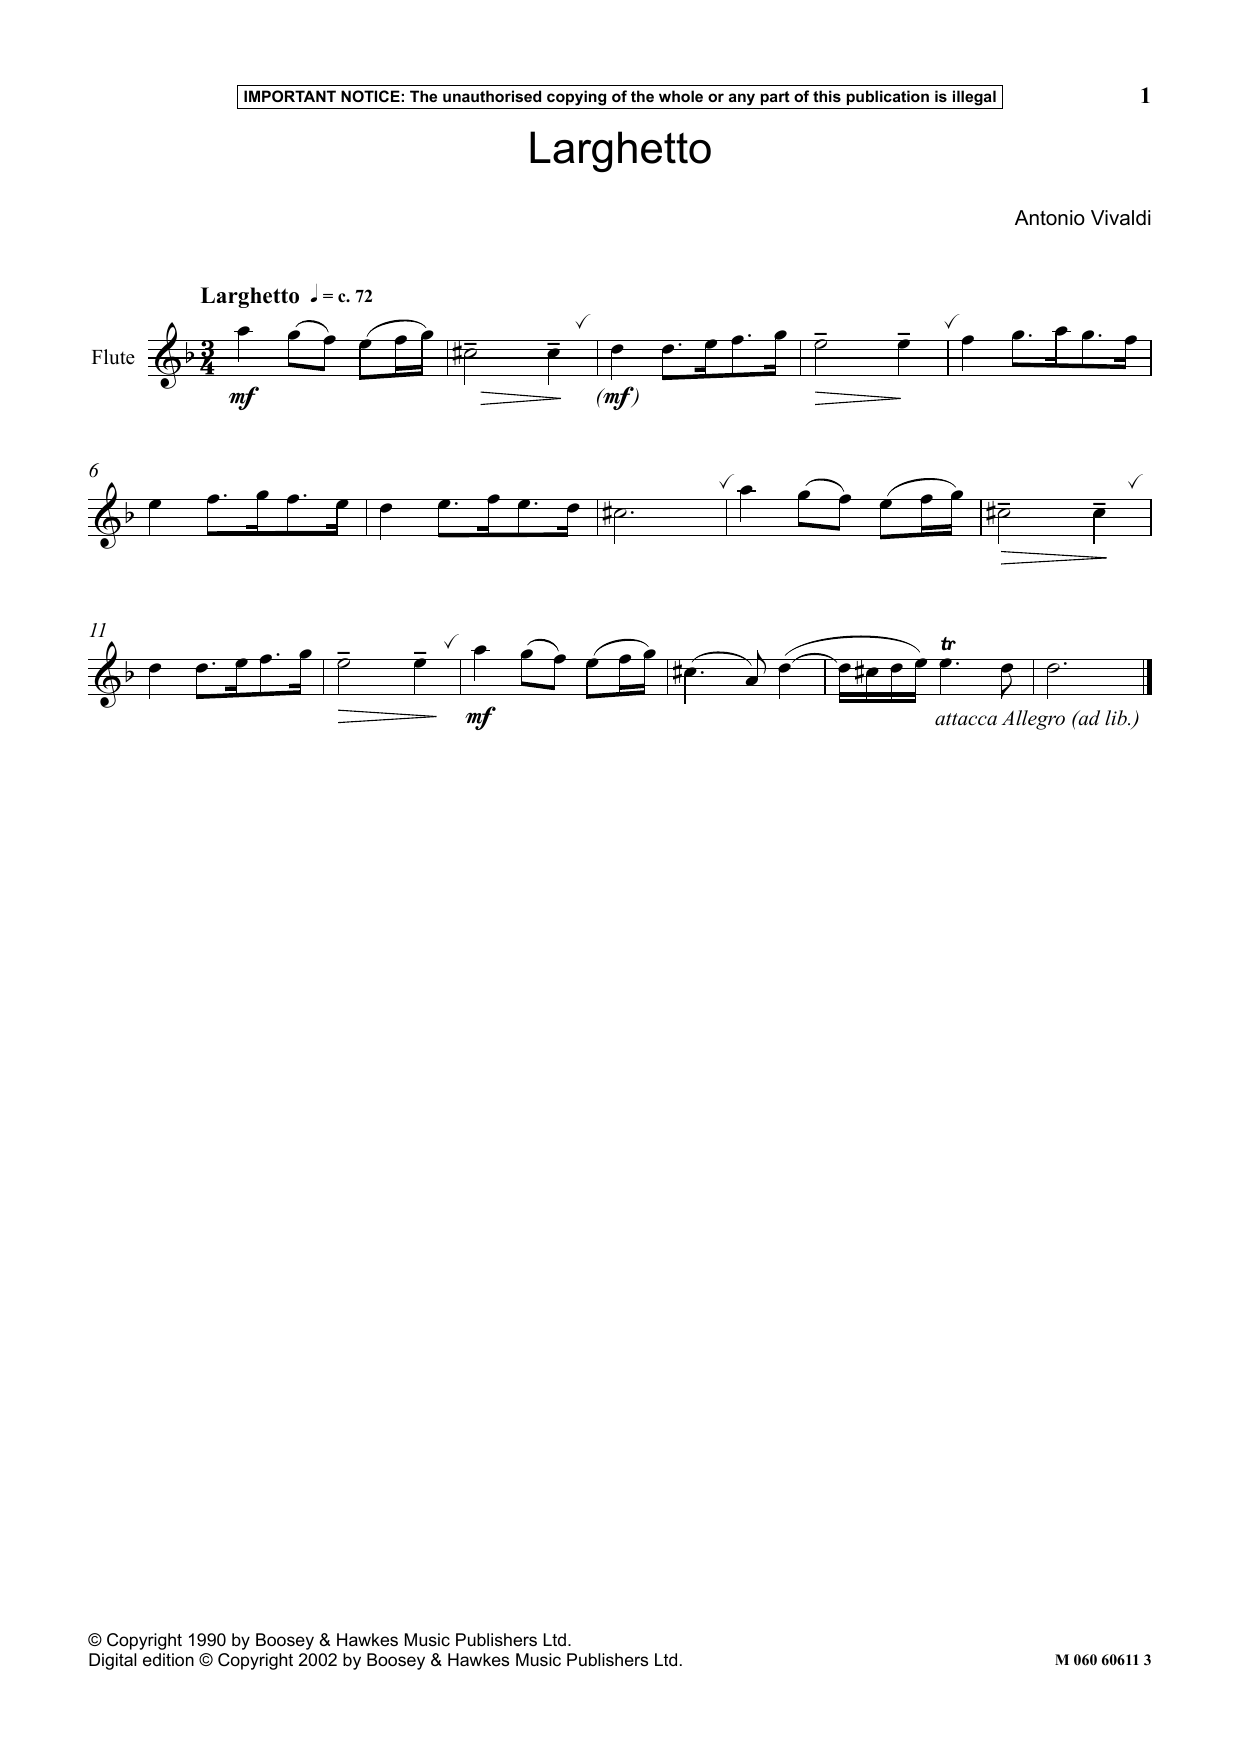 Antonio Vivaldi Larghetto Sheet Music Notes & Chords for Instrumental Solo - Download or Print PDF